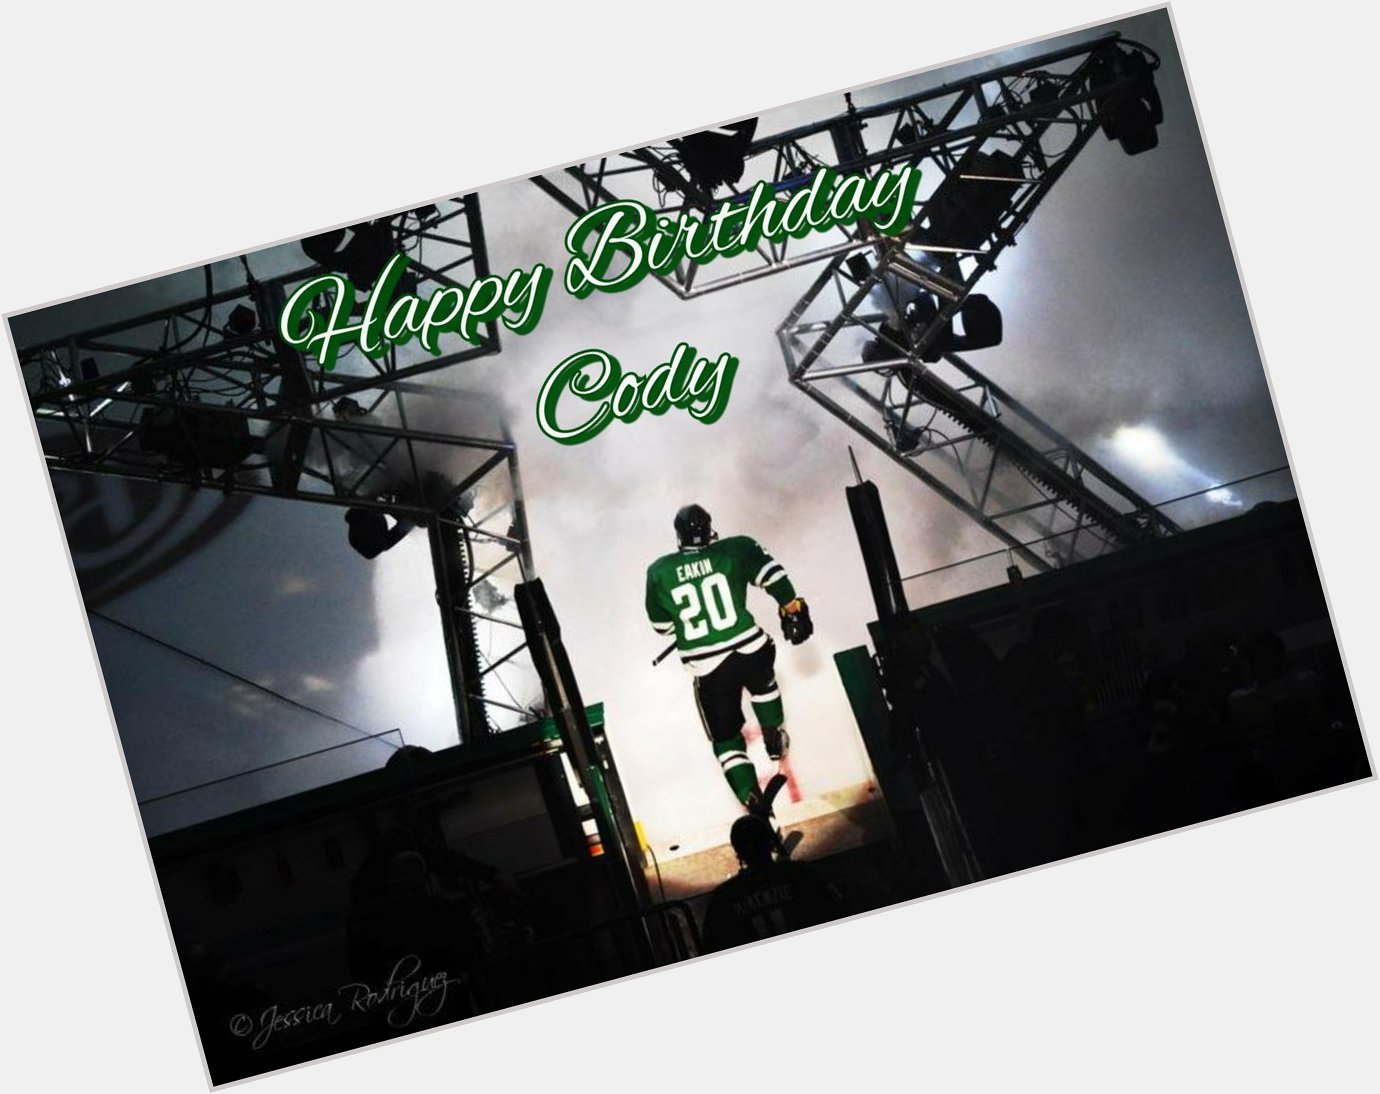 Happy Birthday to our Cody Eakin. 